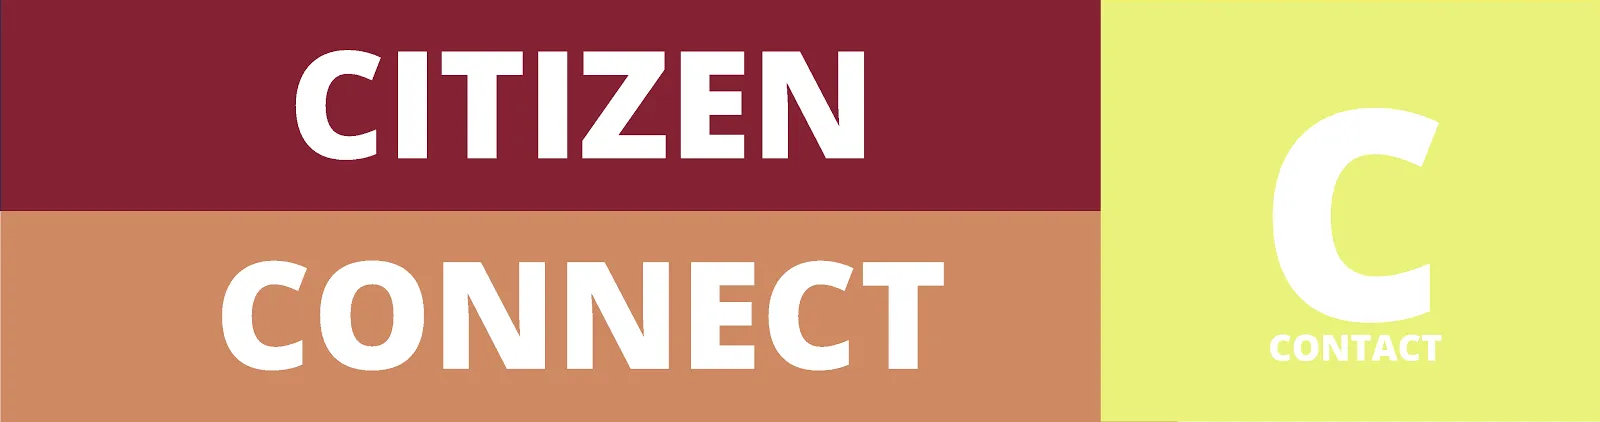 Citizen Connect Contact